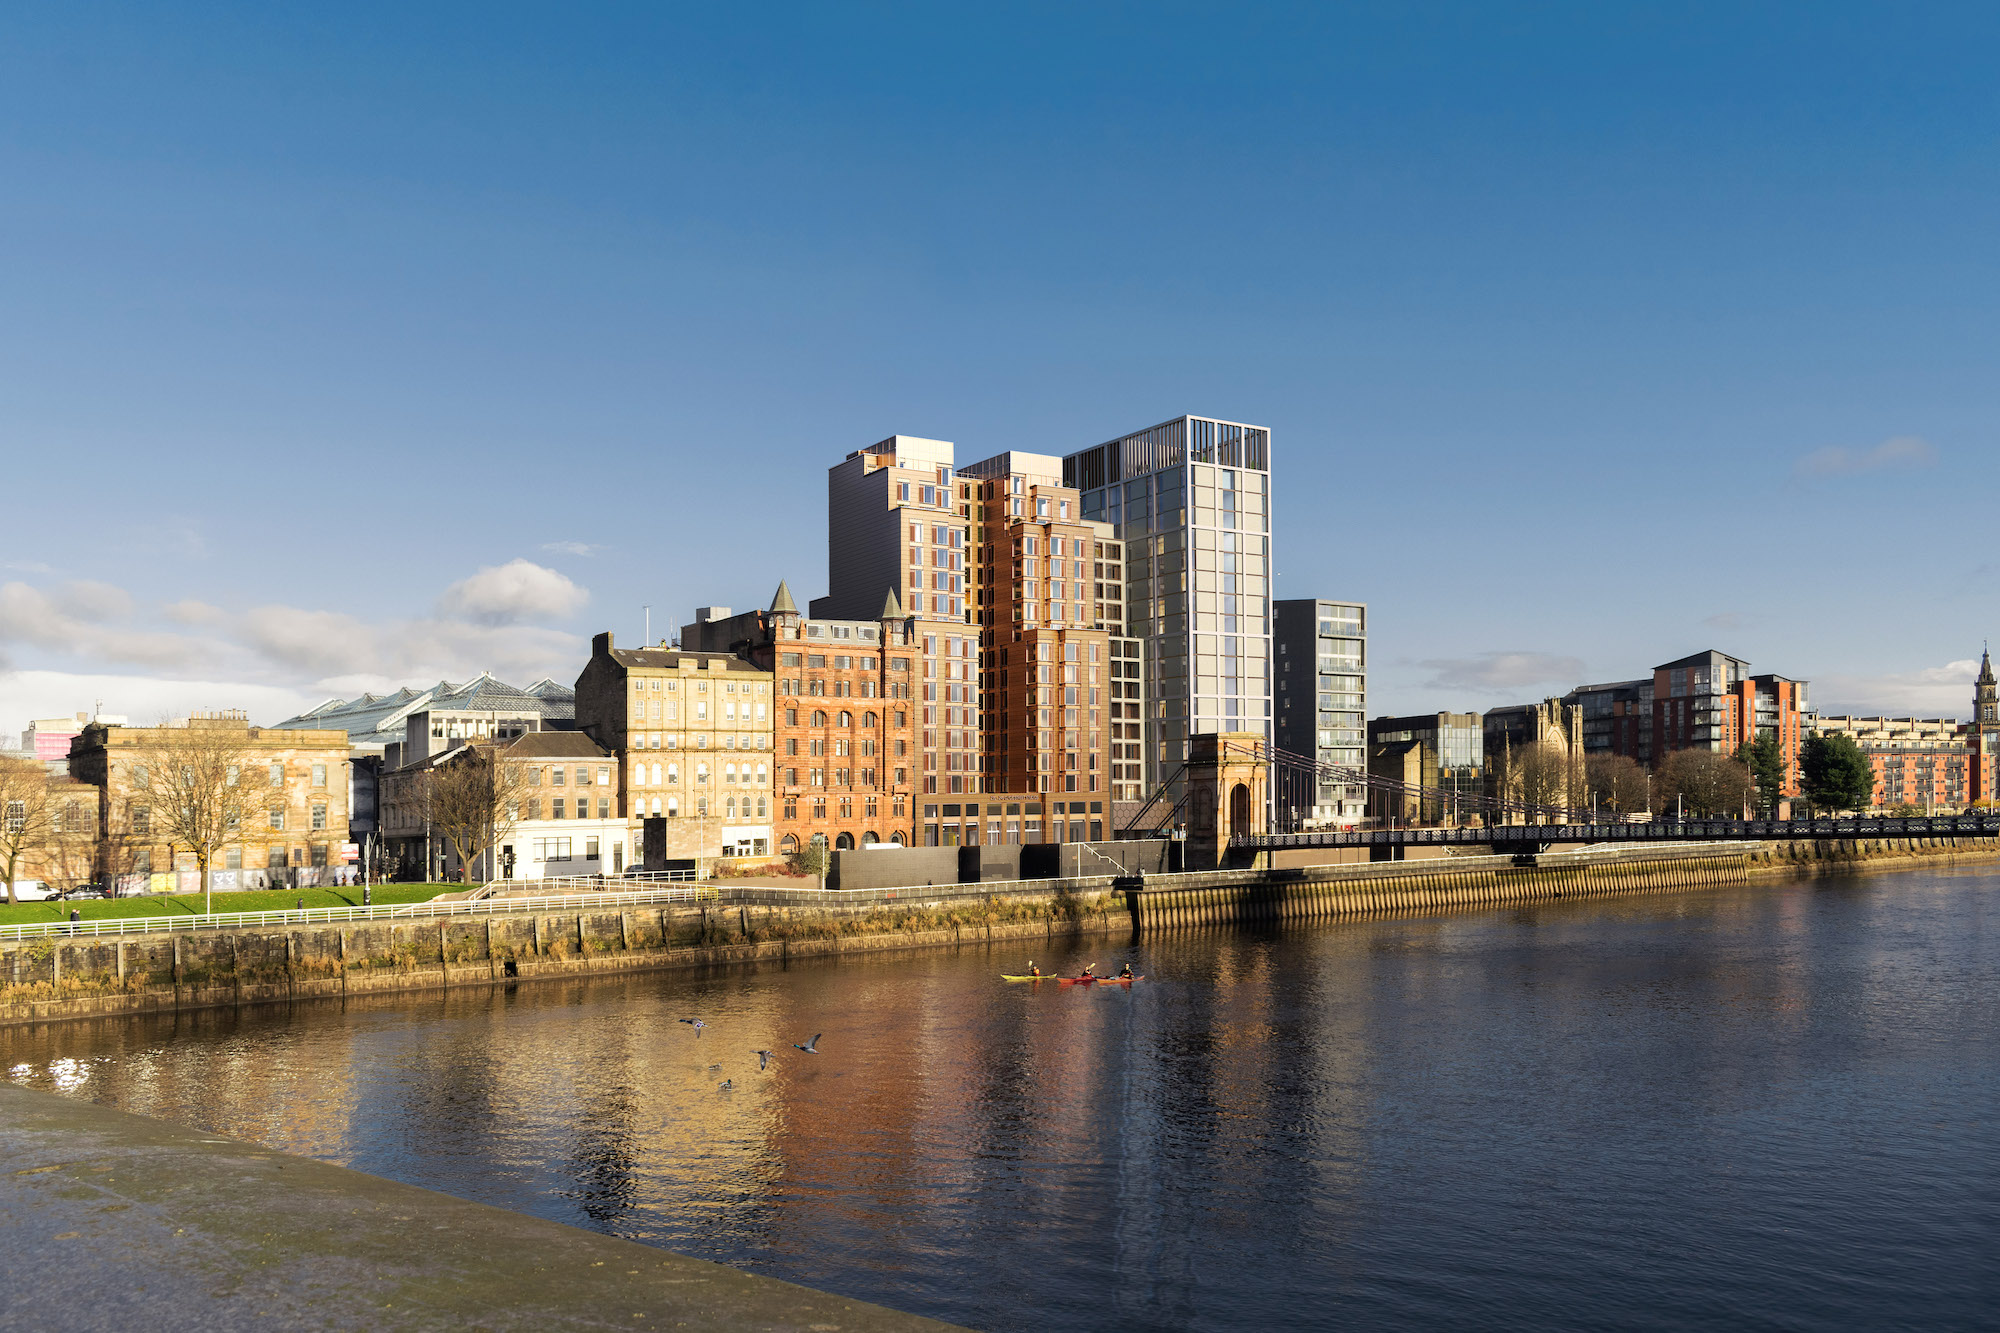 Hilton to open new Motto hotel in Glasgow